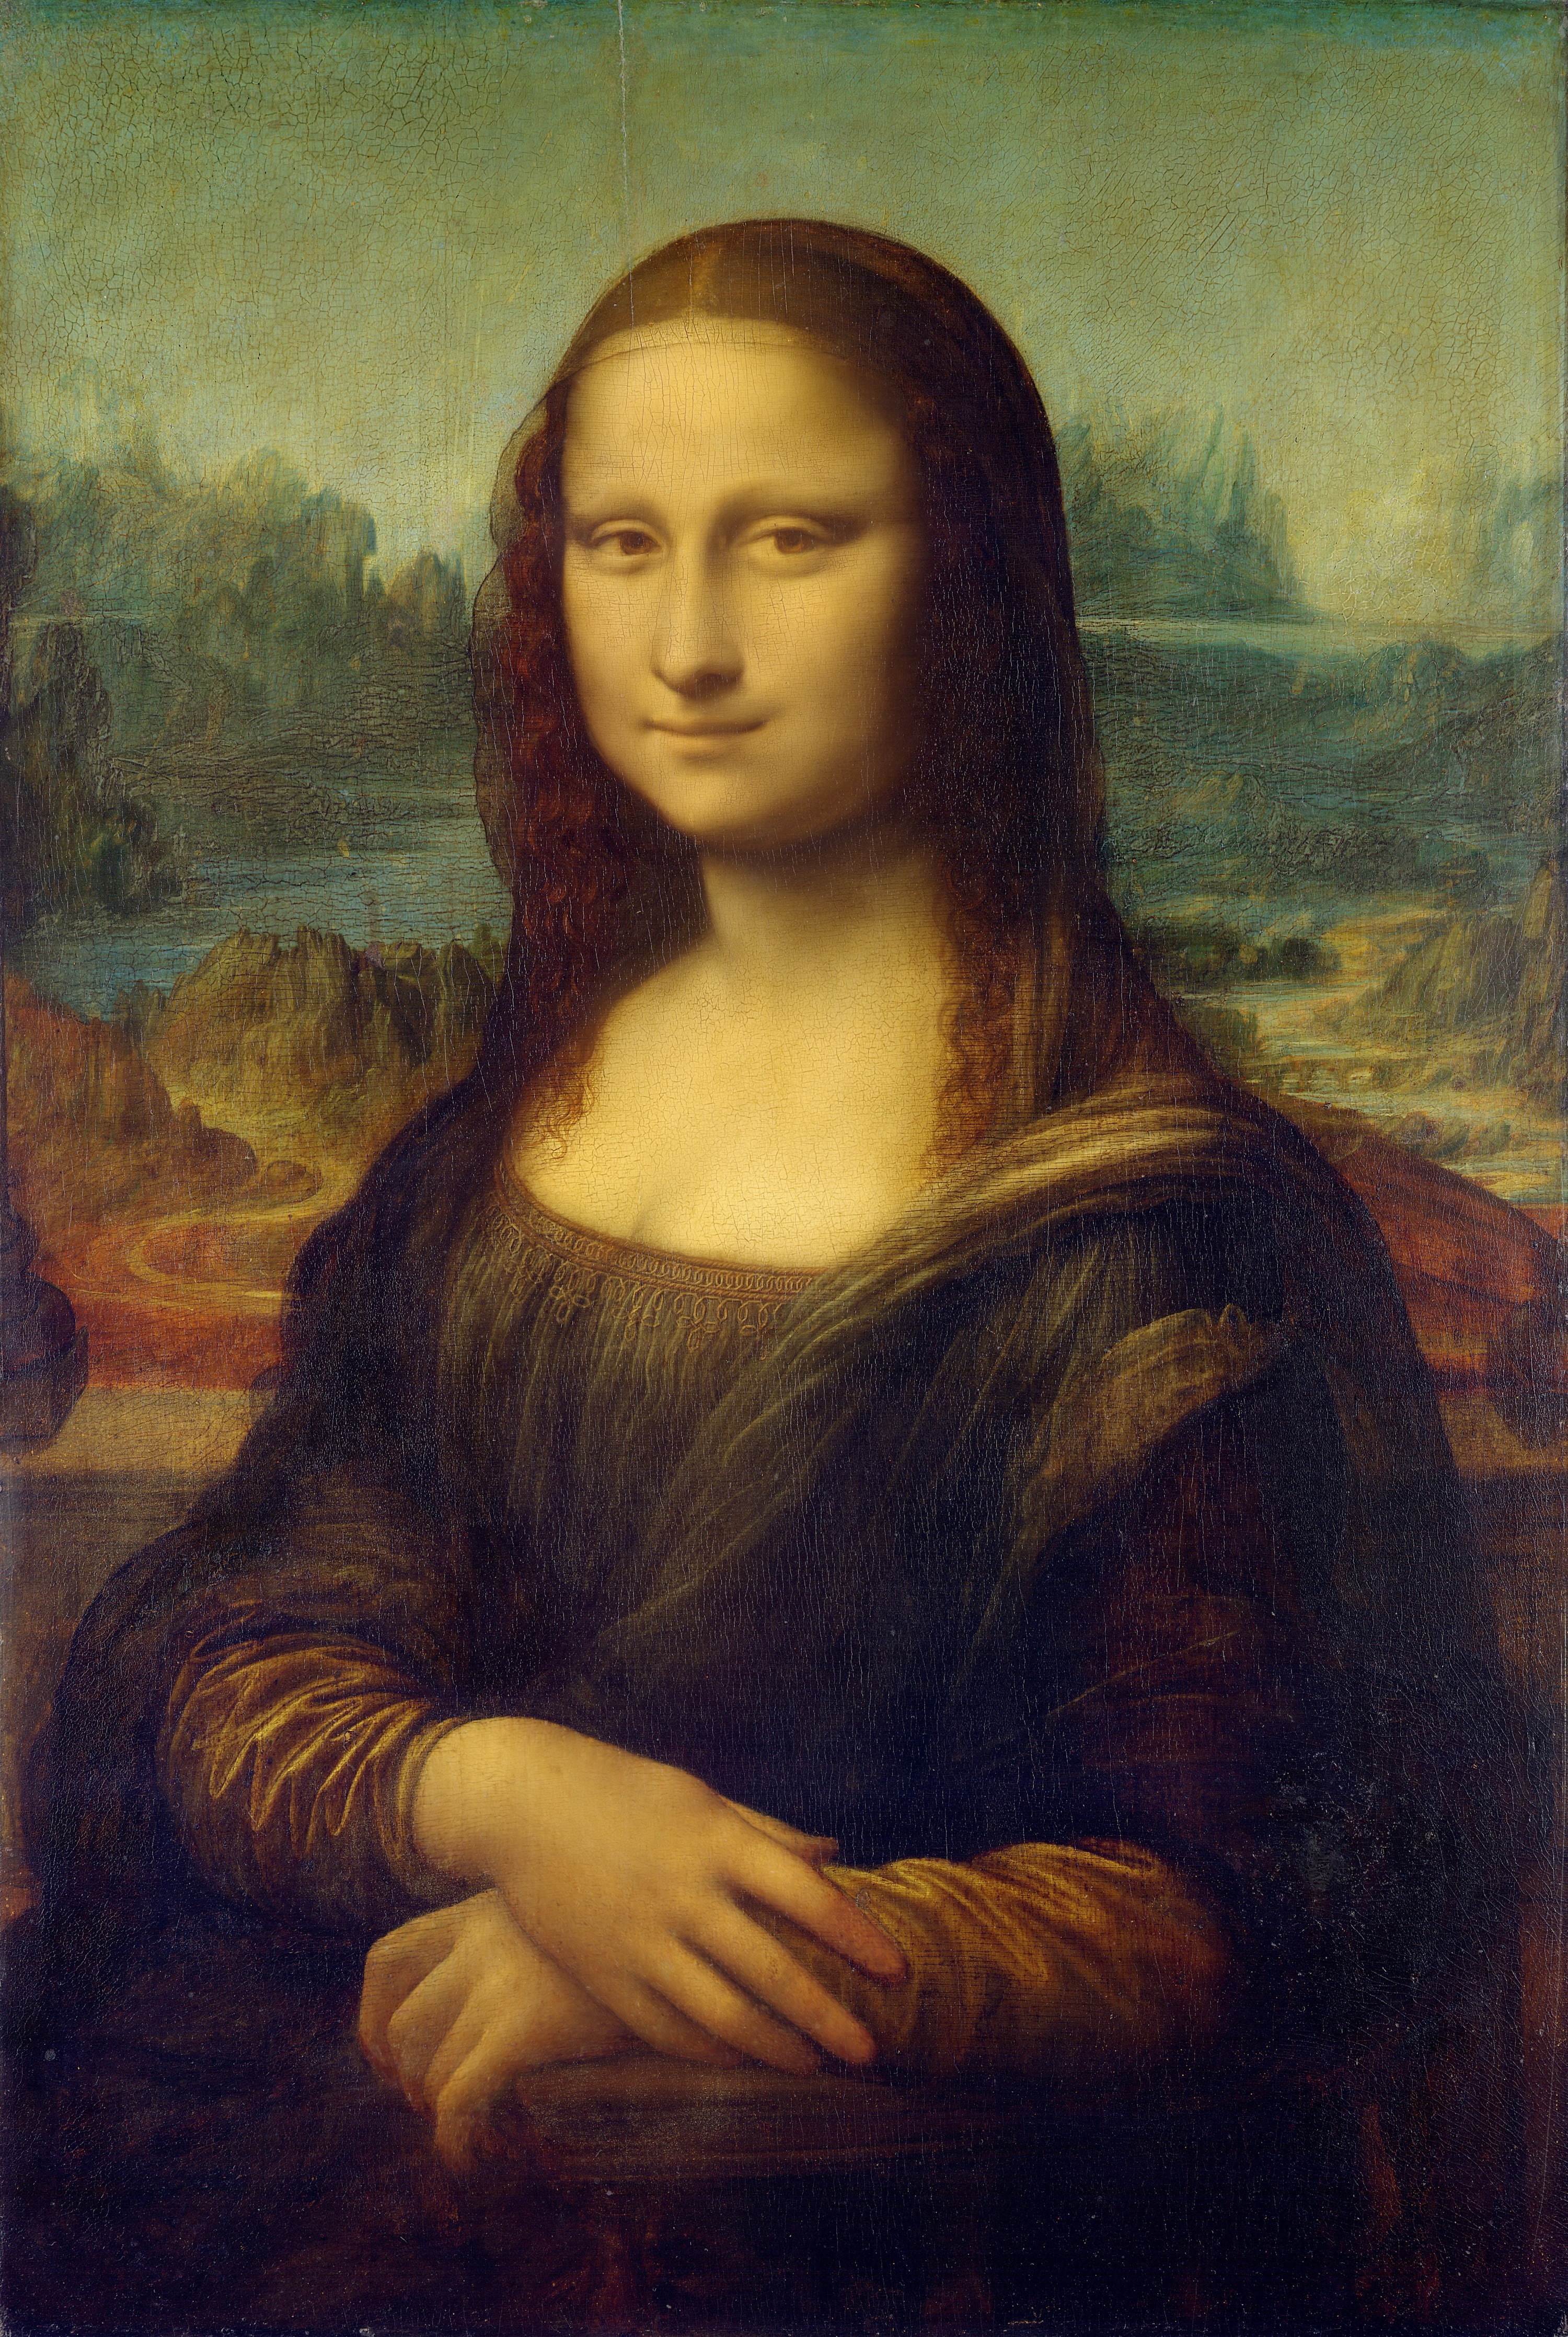 Monalisa by Leonardo Da Vinci painting, Mona Lisa, portrait, hairstyle